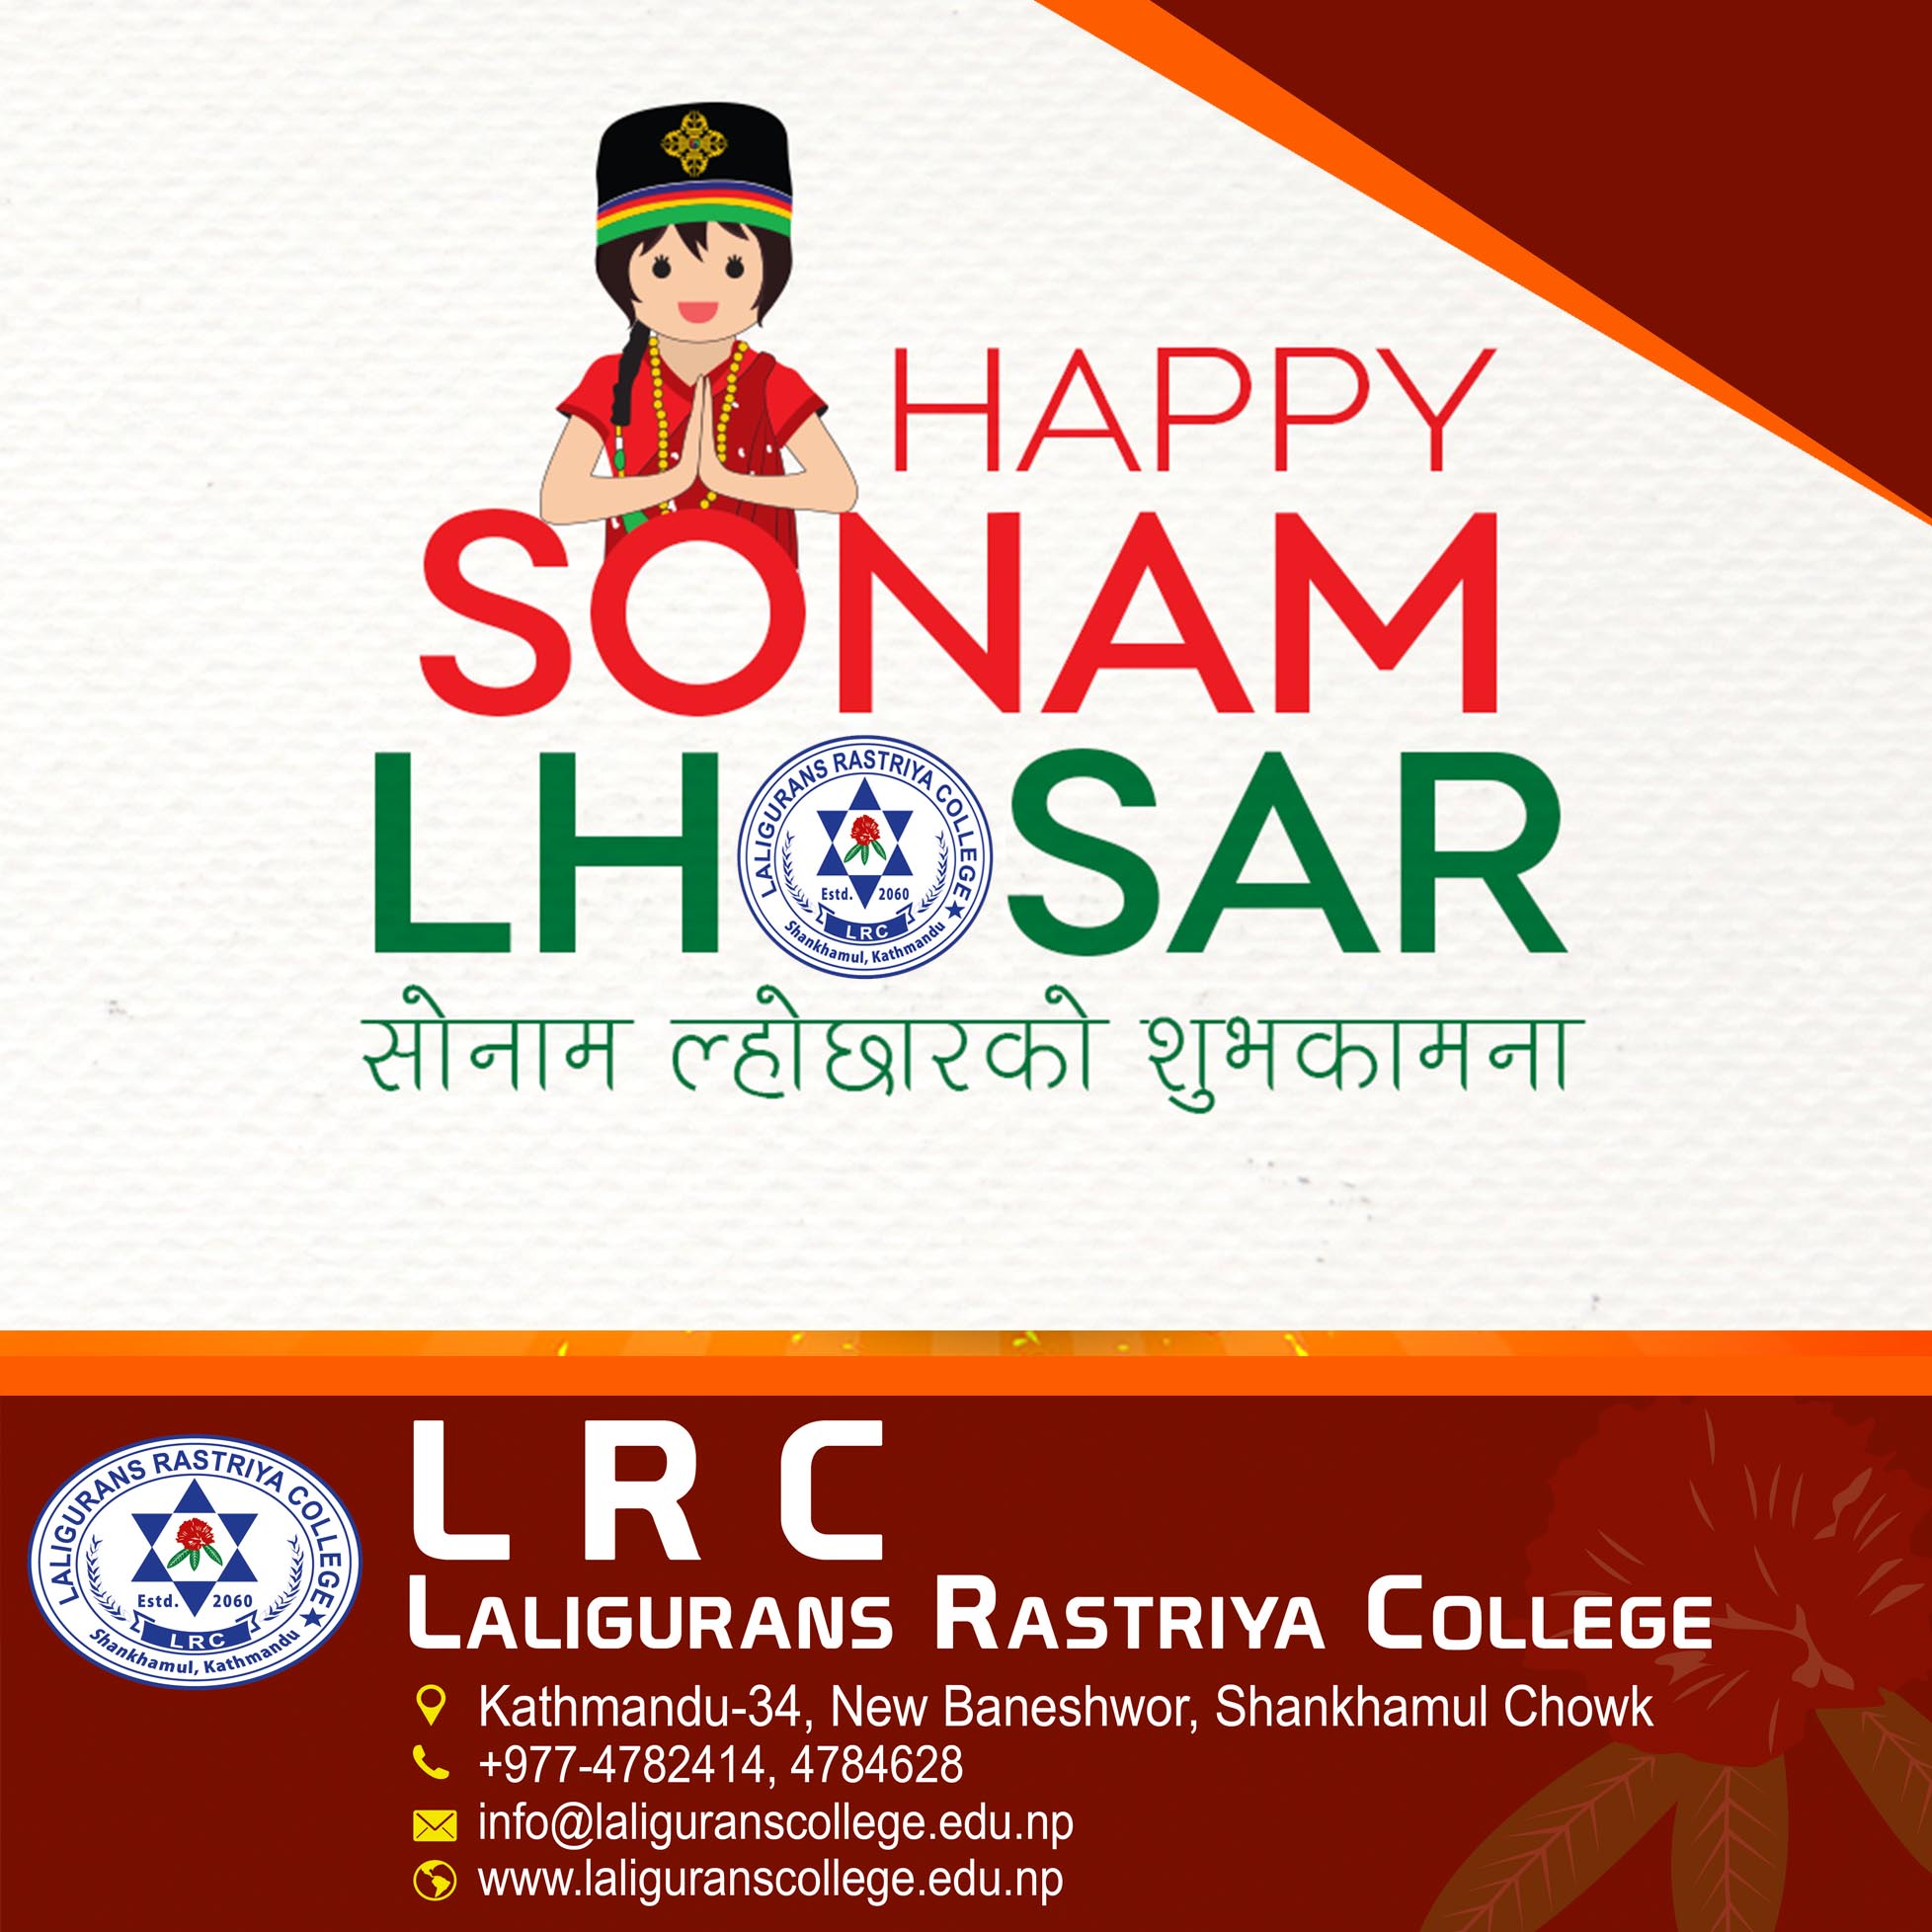 Happy Sonam Losar